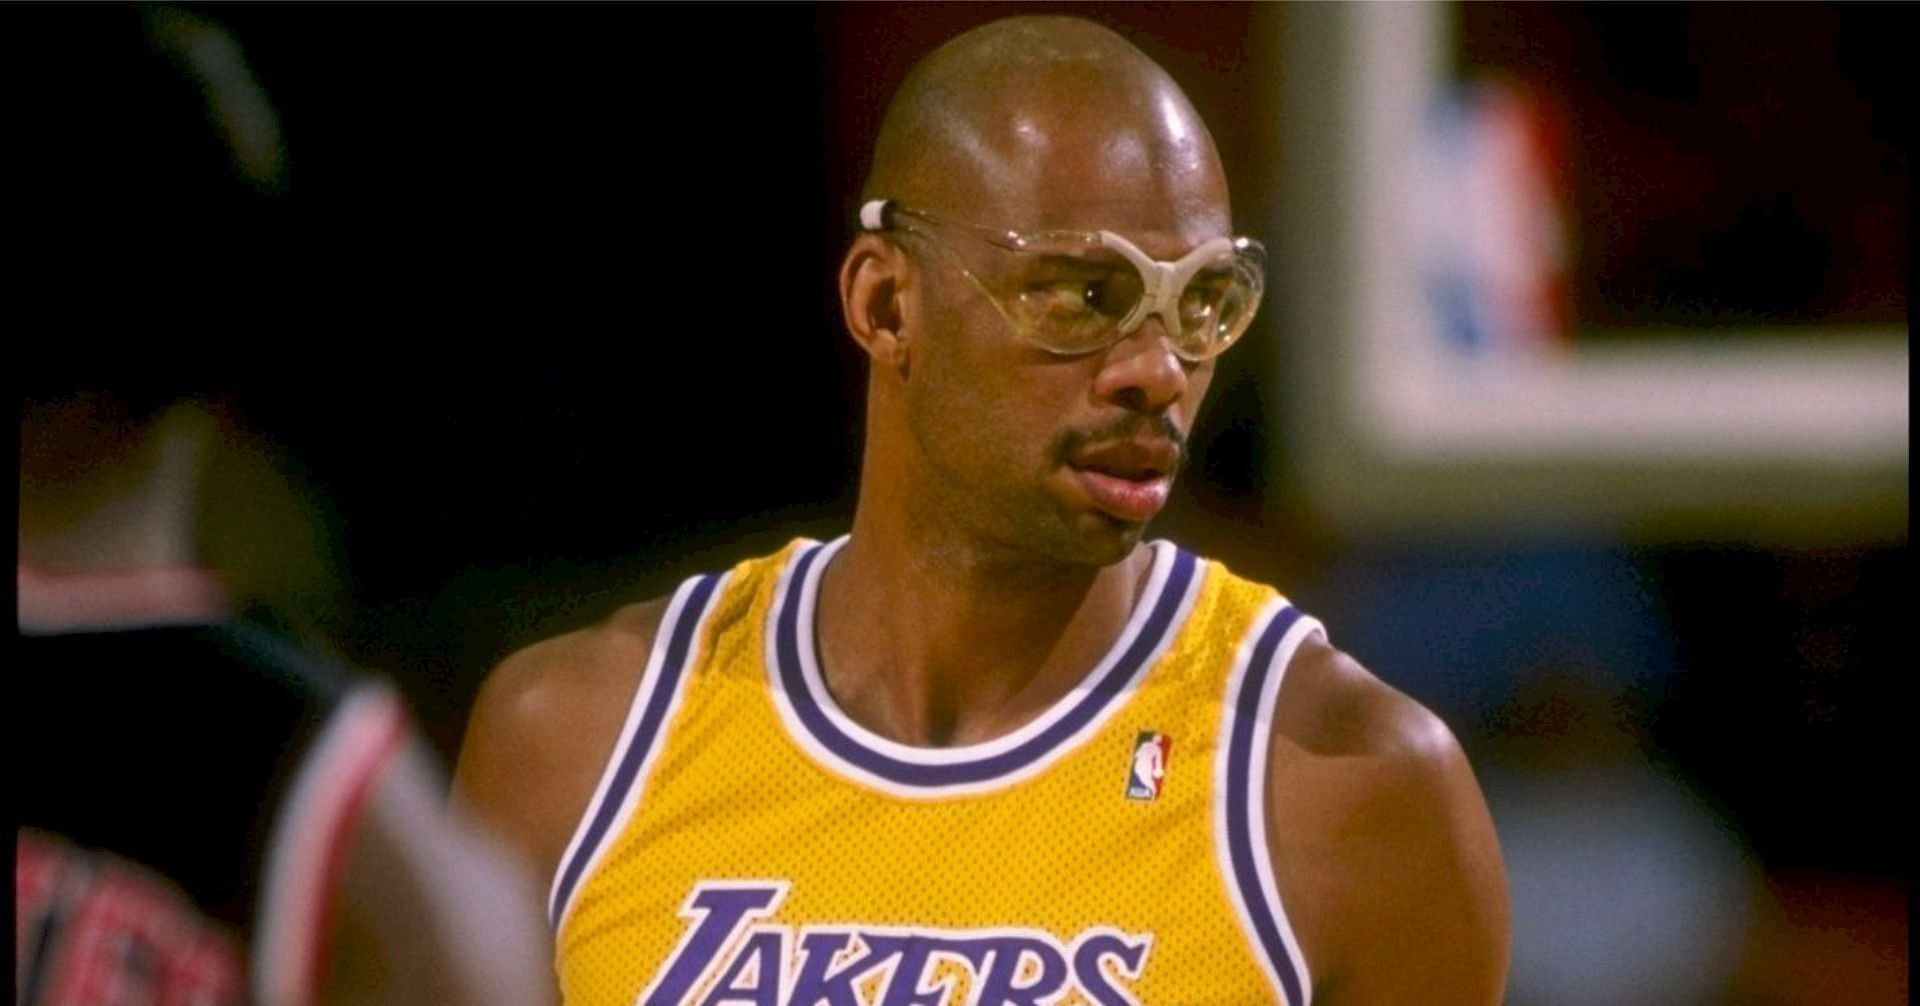 LA Lakers legend Kareem Abdul-Jabbar